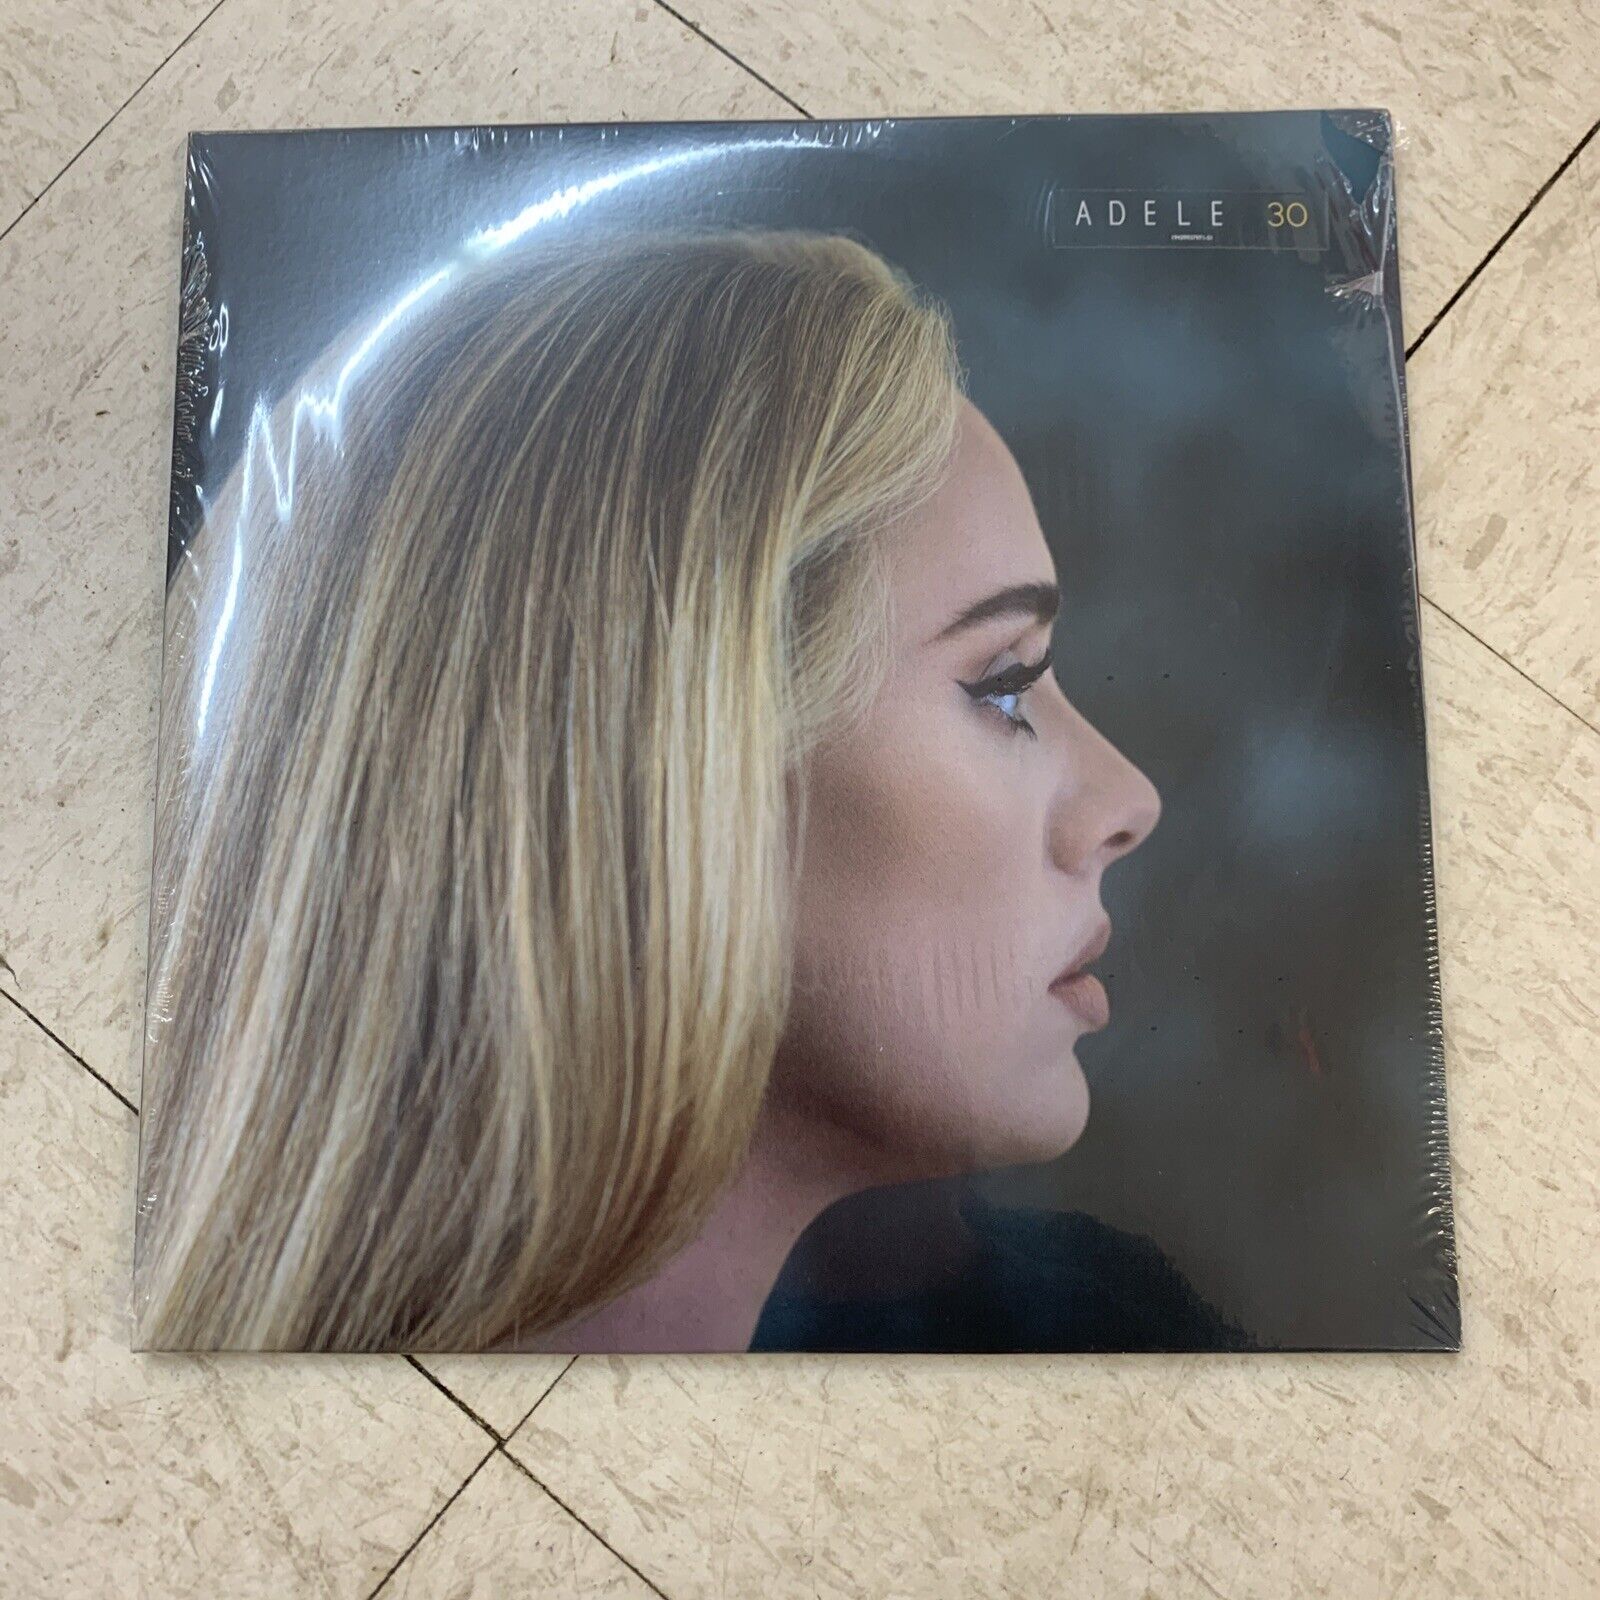 Adele 30 Exclusive Amazon White Vinyl 2x LP Limited Edition 